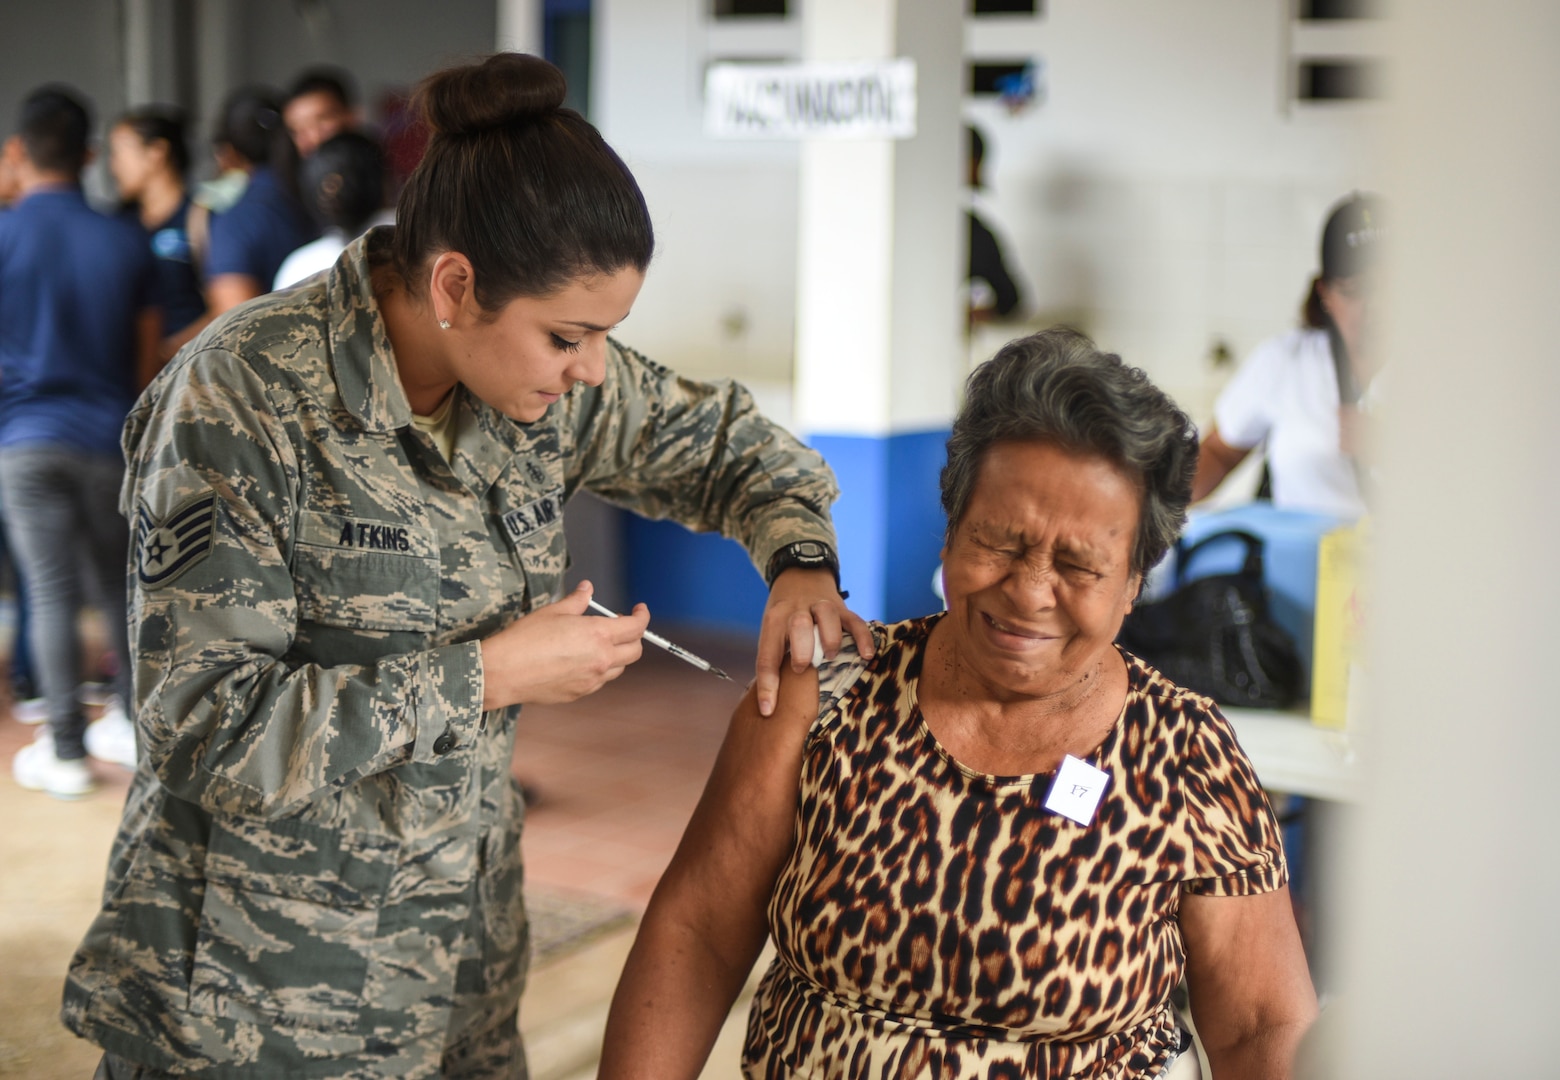 An Air Force medic gives a woman a shot.